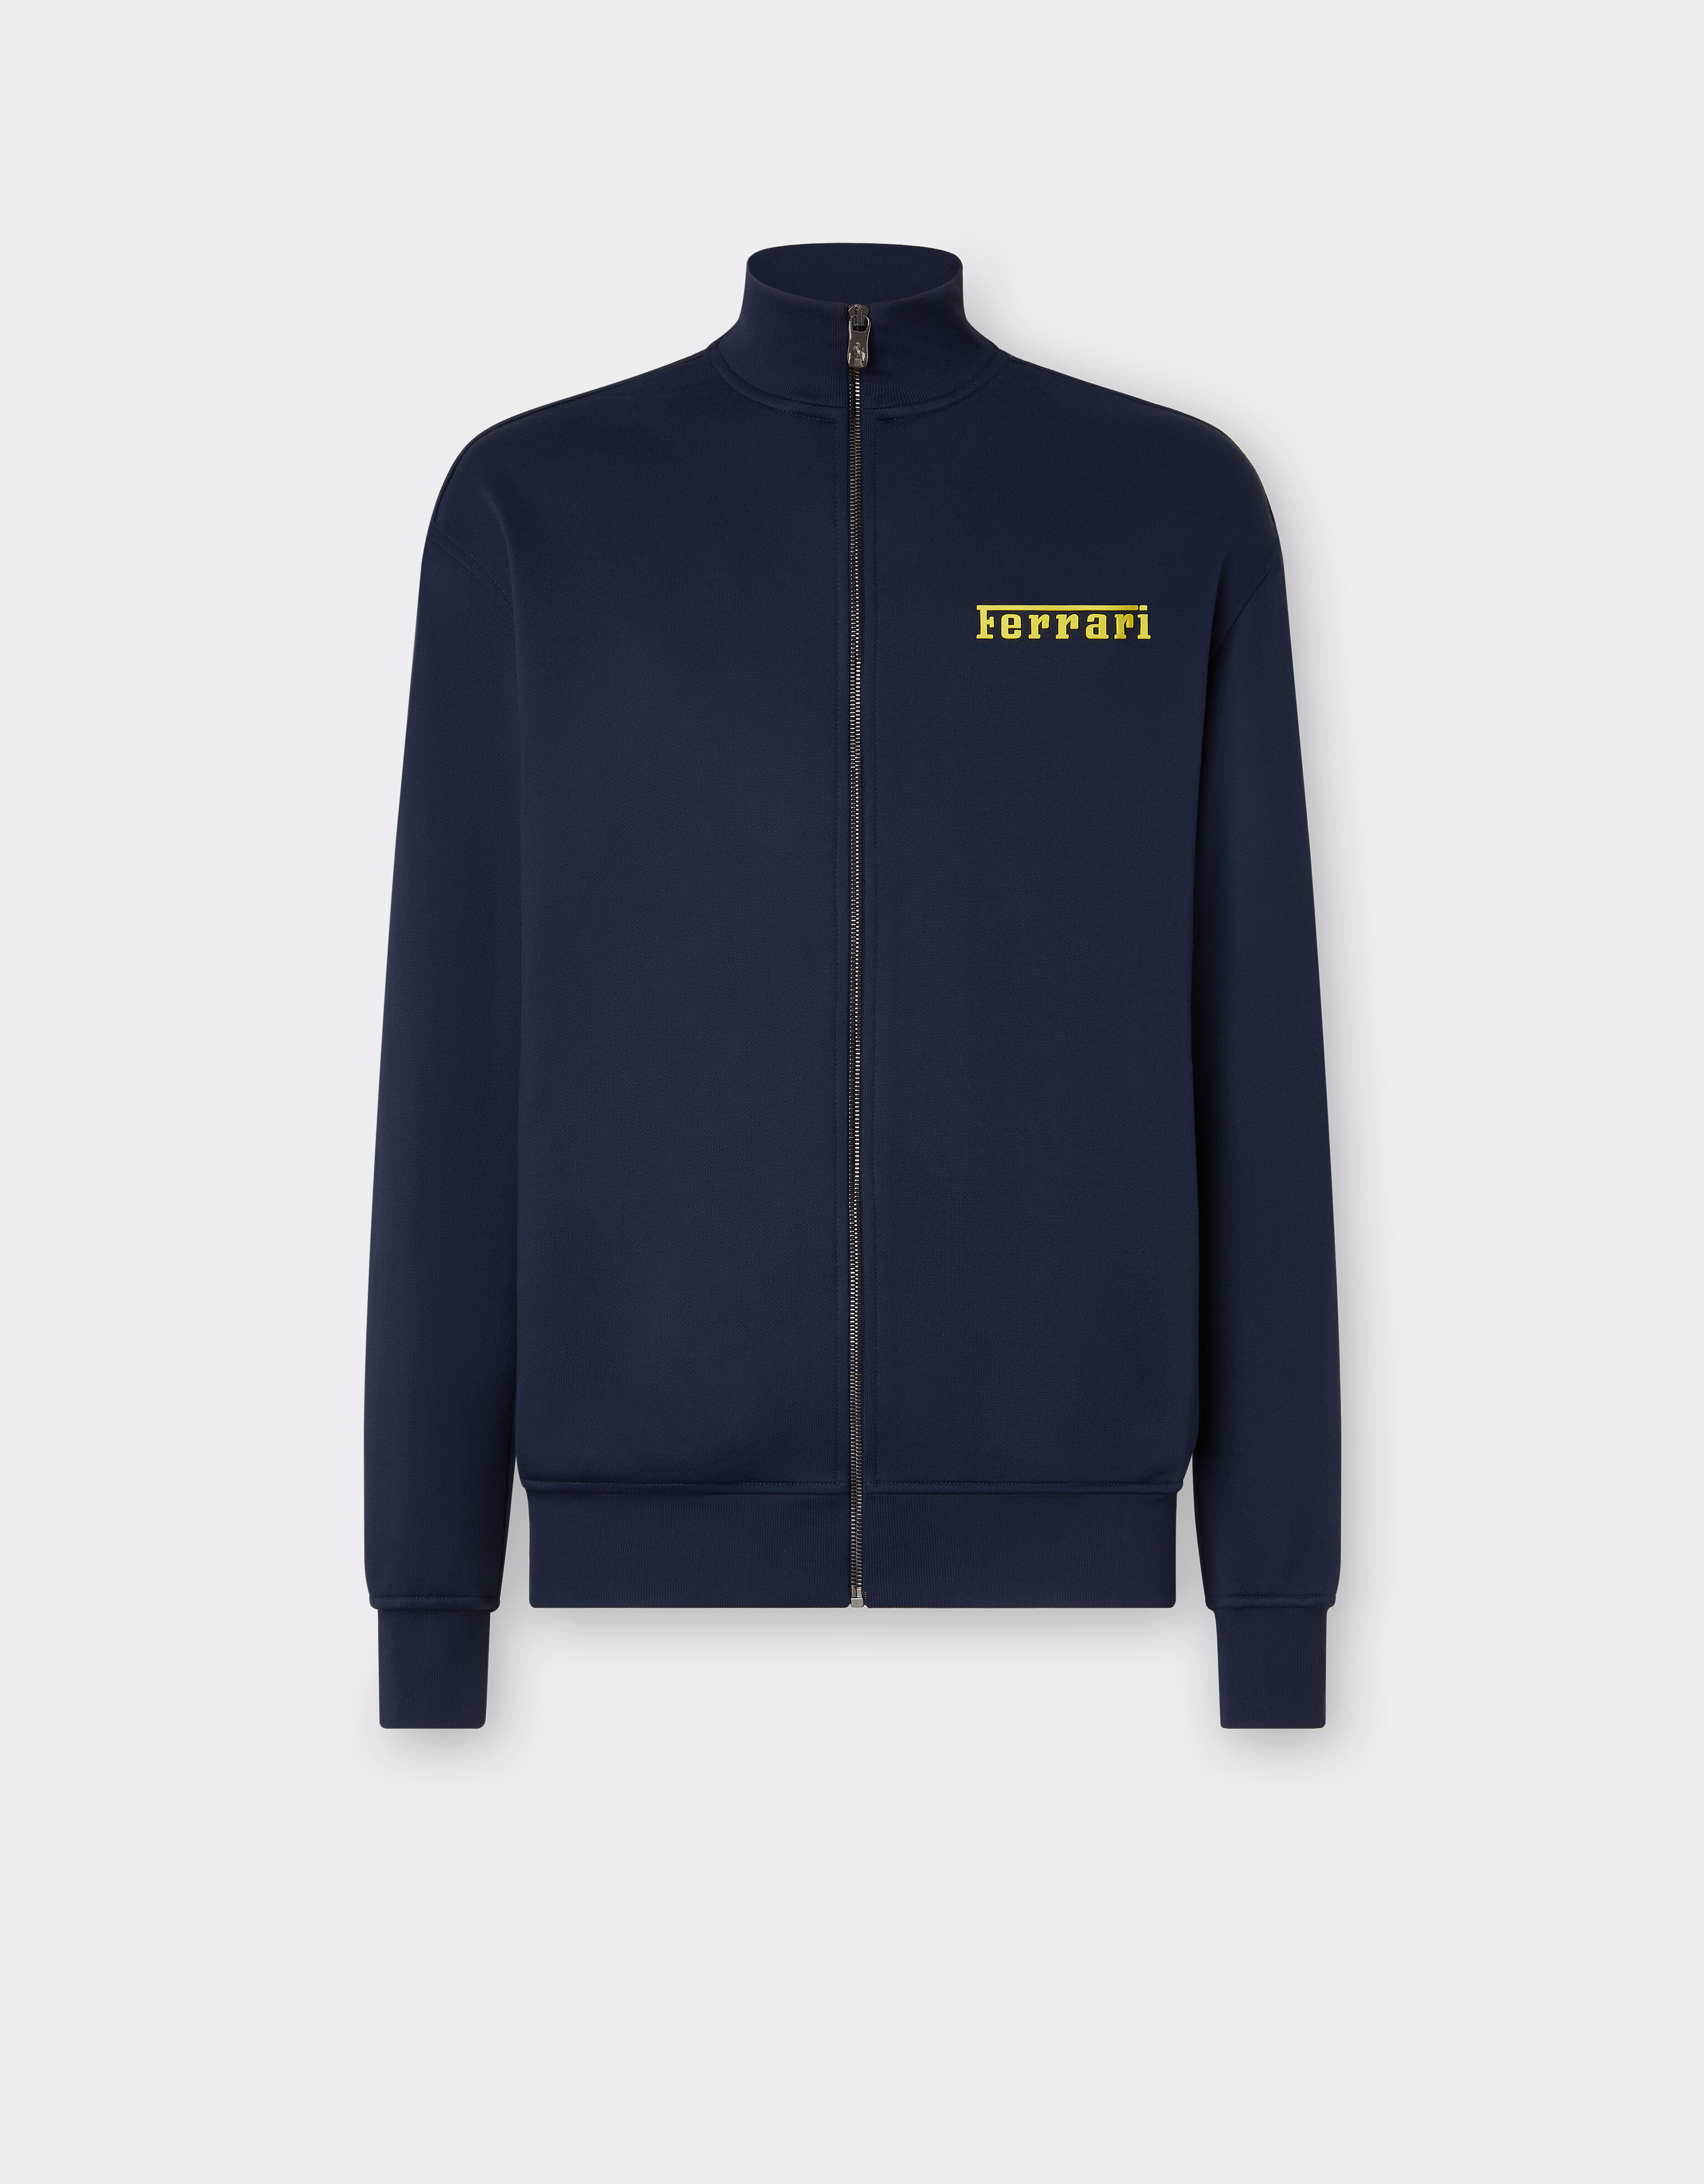 Ferrari Sweat-shirt avec fermeture Éclair et logo Ferrari Bleu aigue-marine 21508f